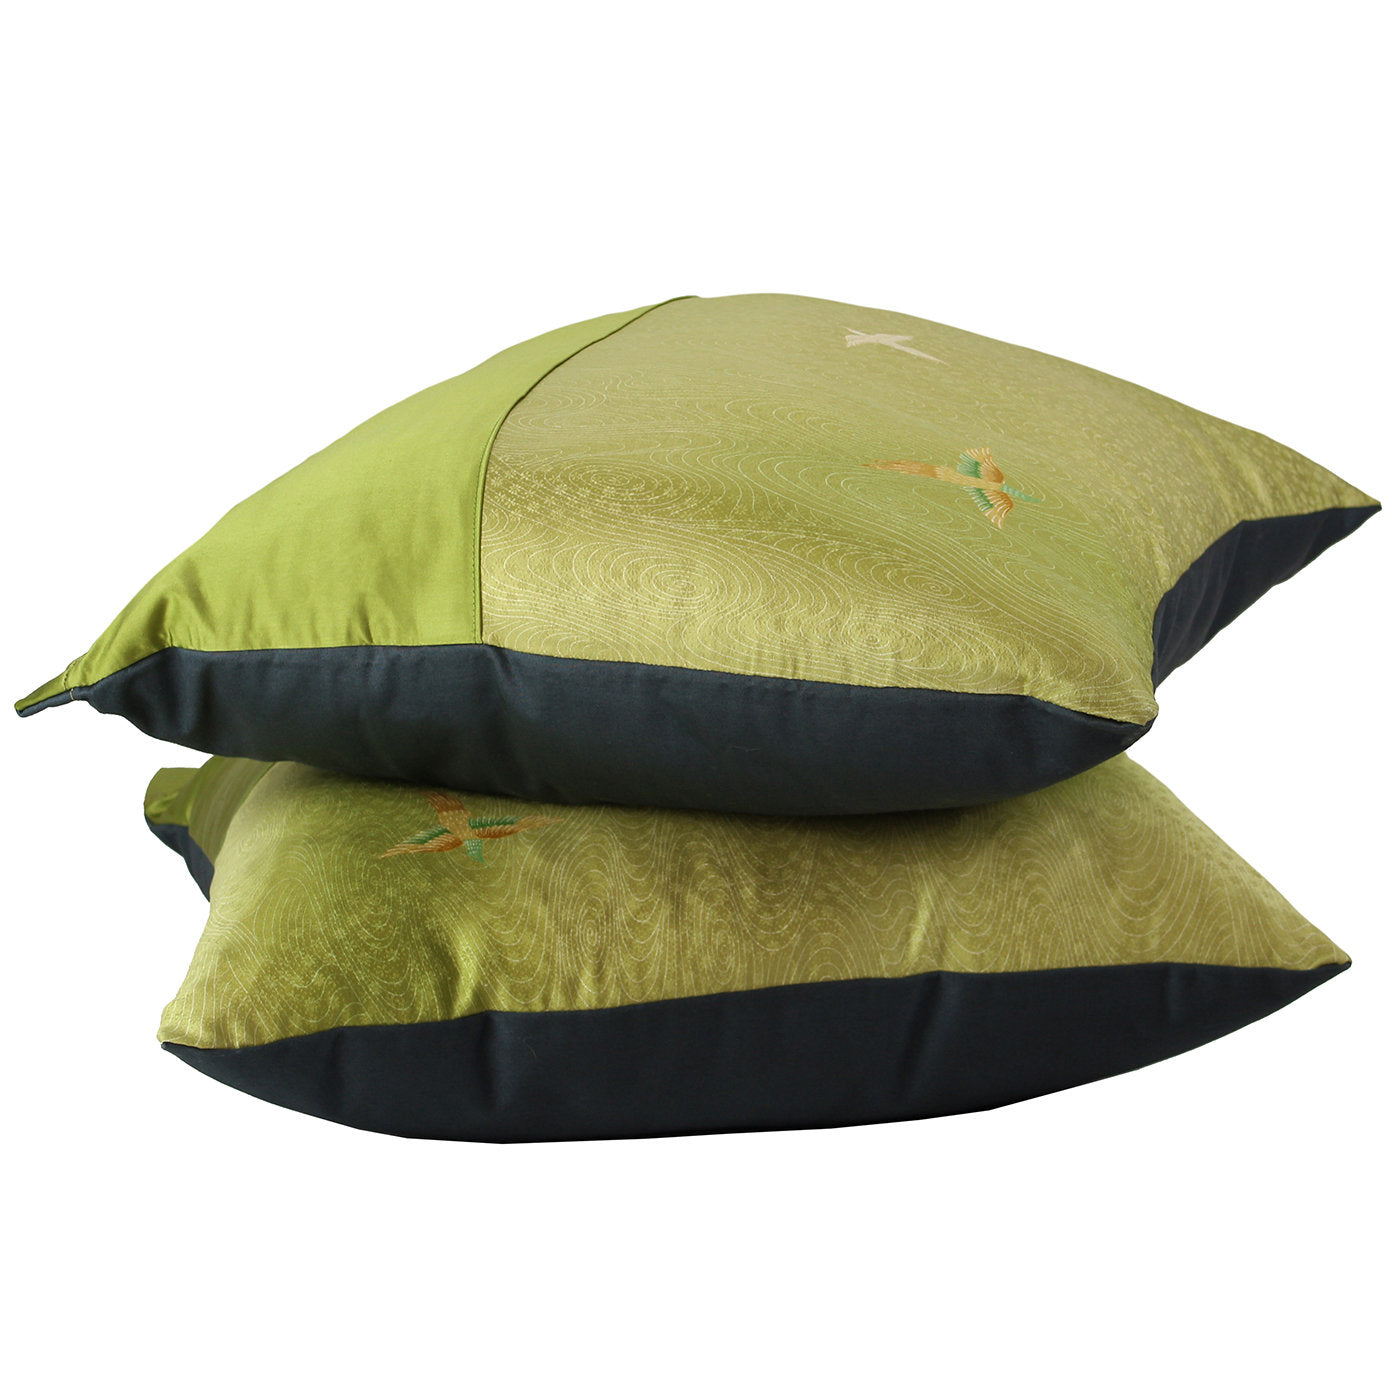 Set of 2 Green Paradise Birds Cushions  - Alternative view 1